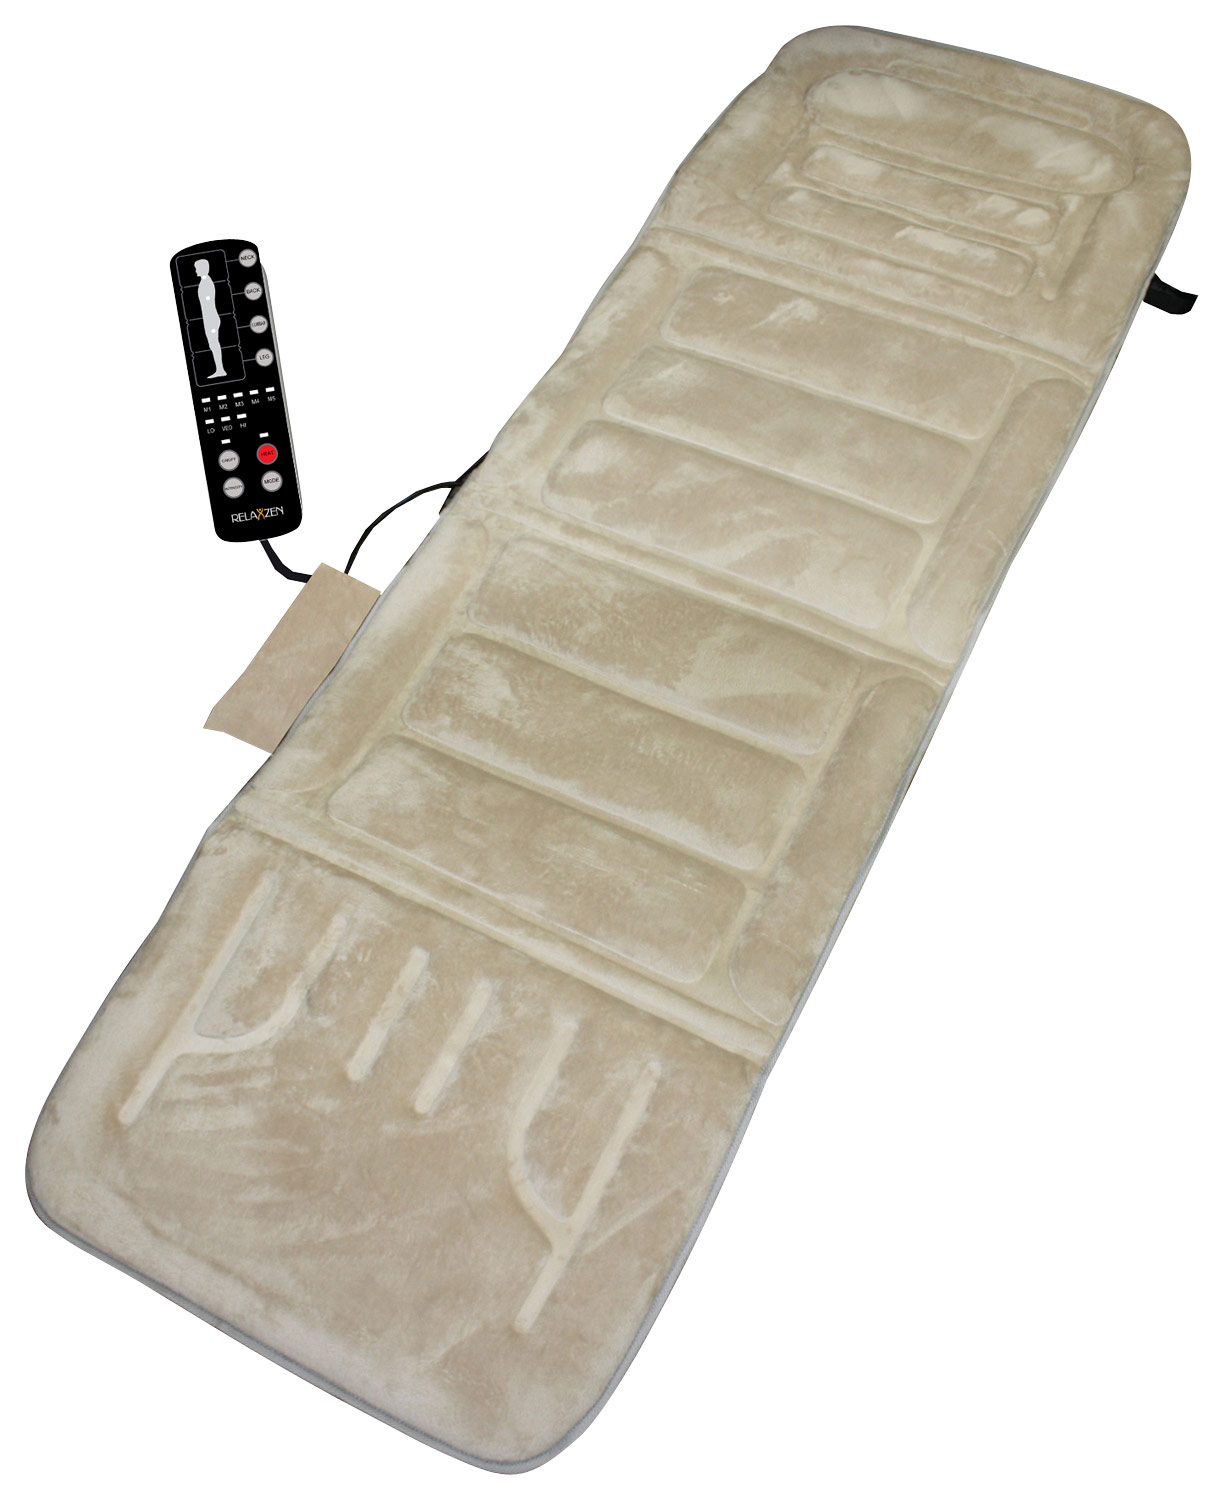  Comfort Products Inc. - Heated Massage Mat - Beige